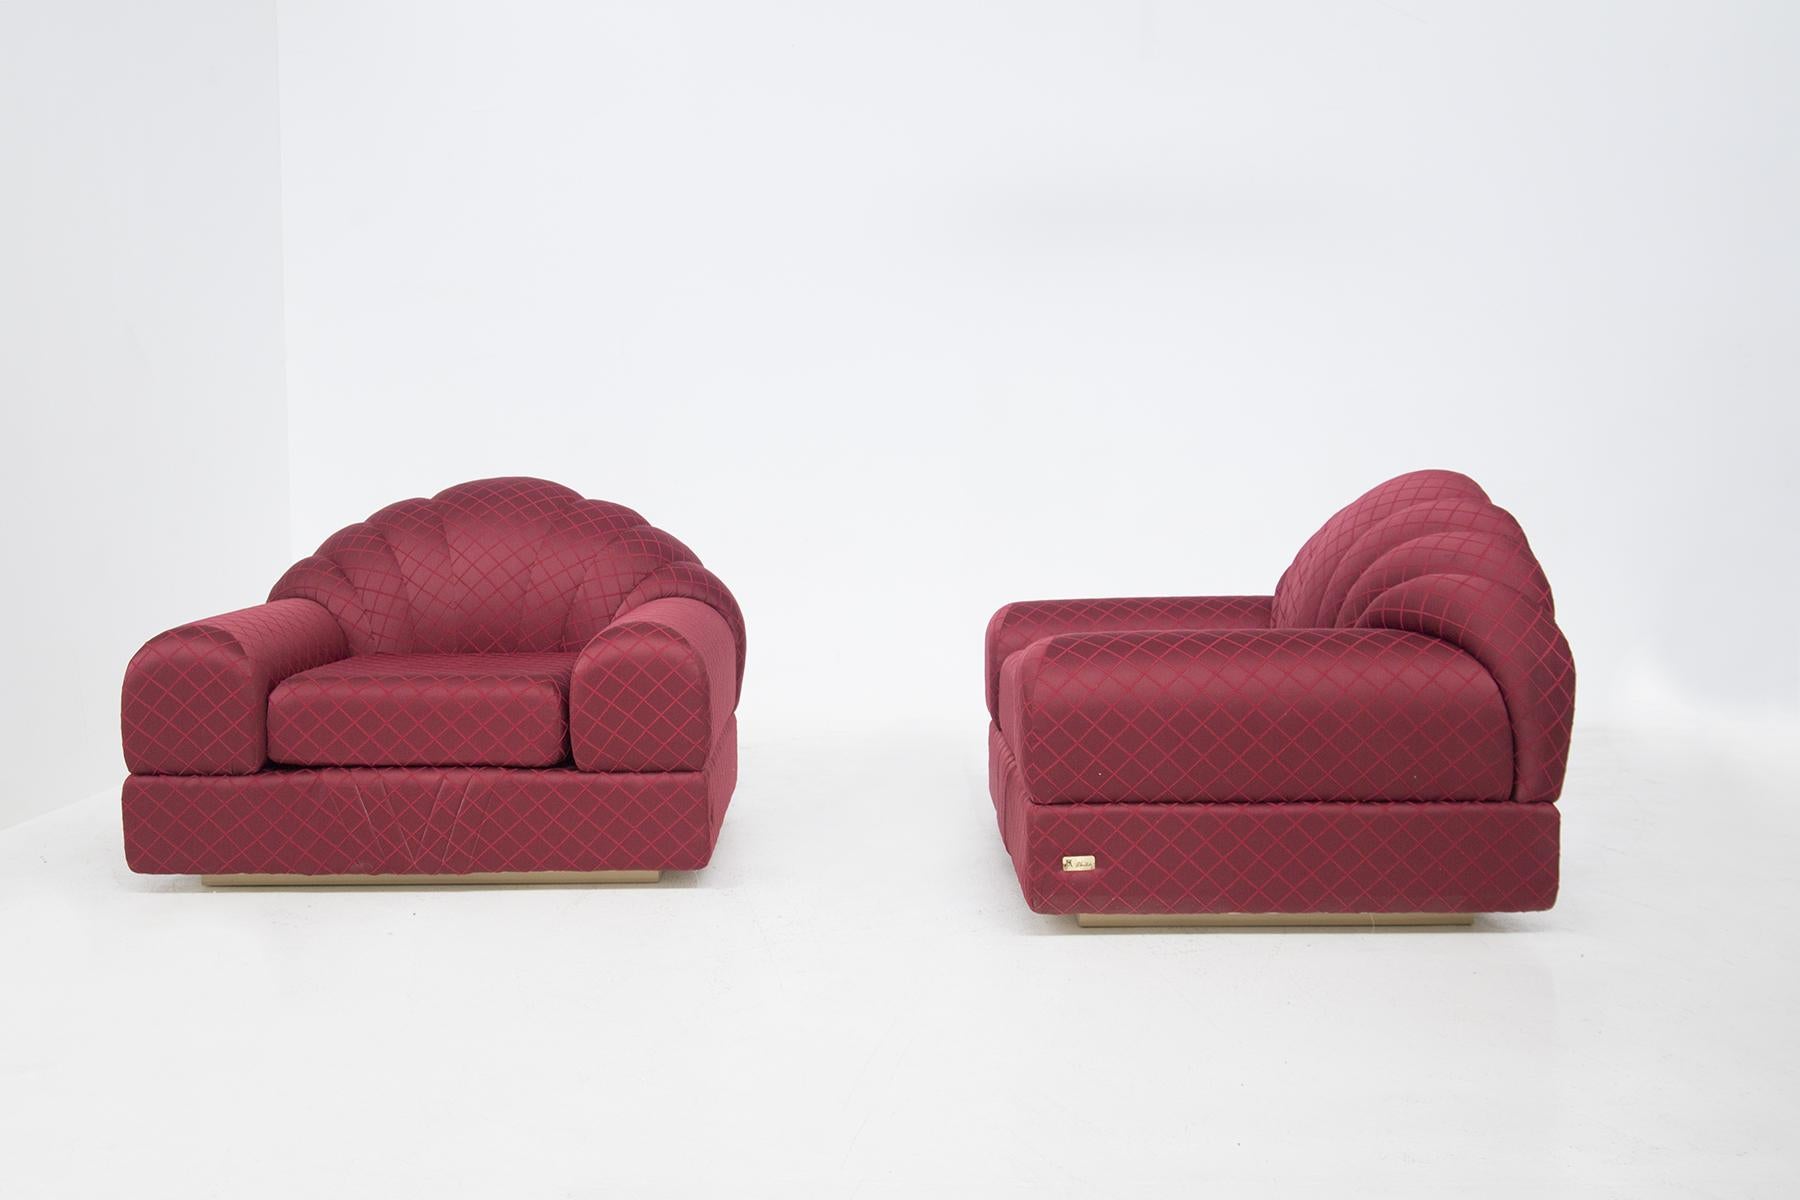 Italian Alain Delon Vintage “Salon” Red Armchairs, Original Label For Sale